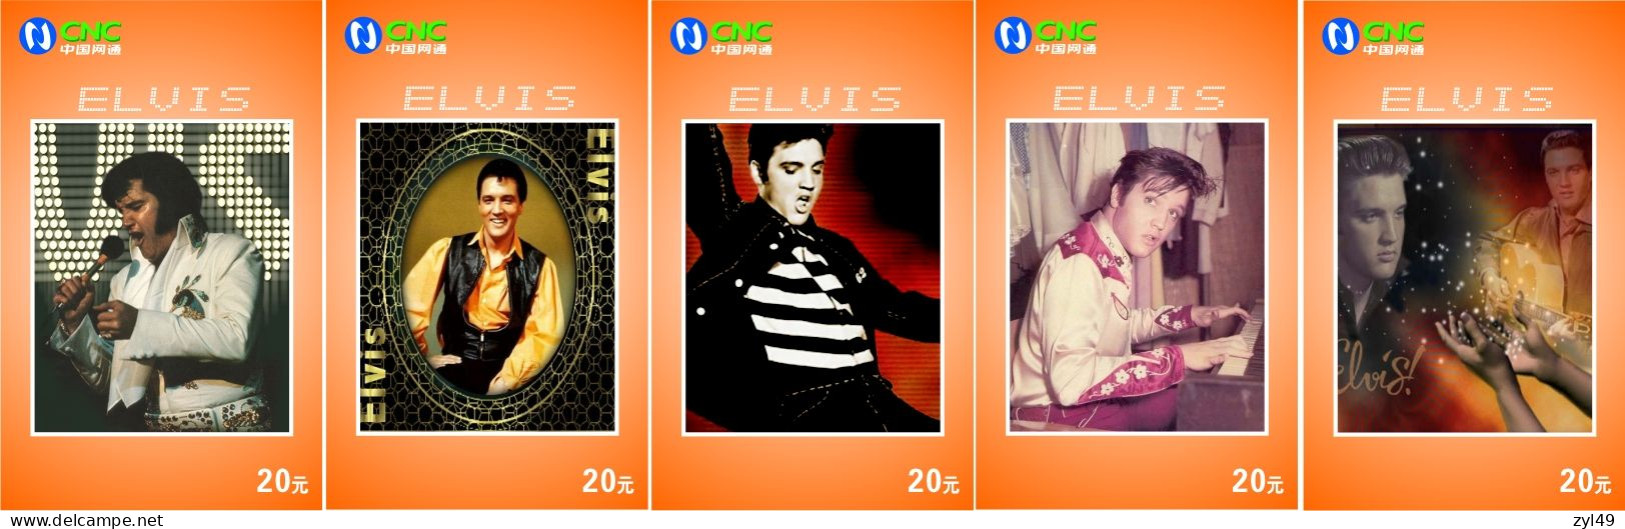 M14009 China phone cards Elvis Presley 180pcs